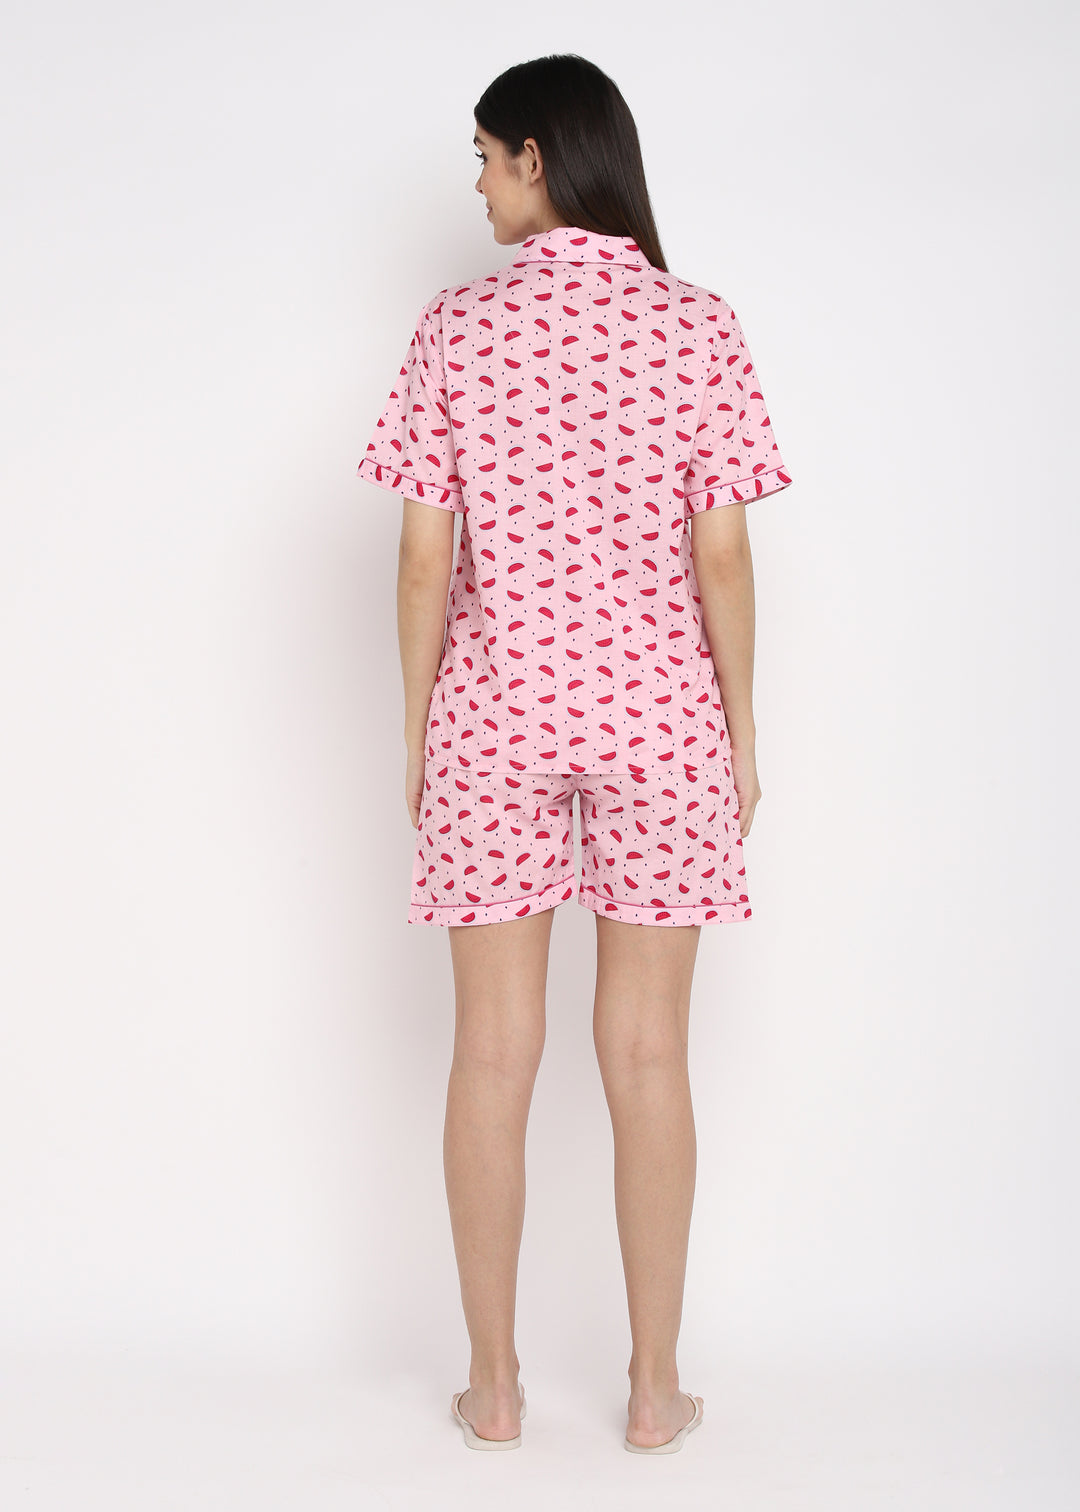 Pink Watermelon Print Shirt and Shorts Women's Set - Shopbloom